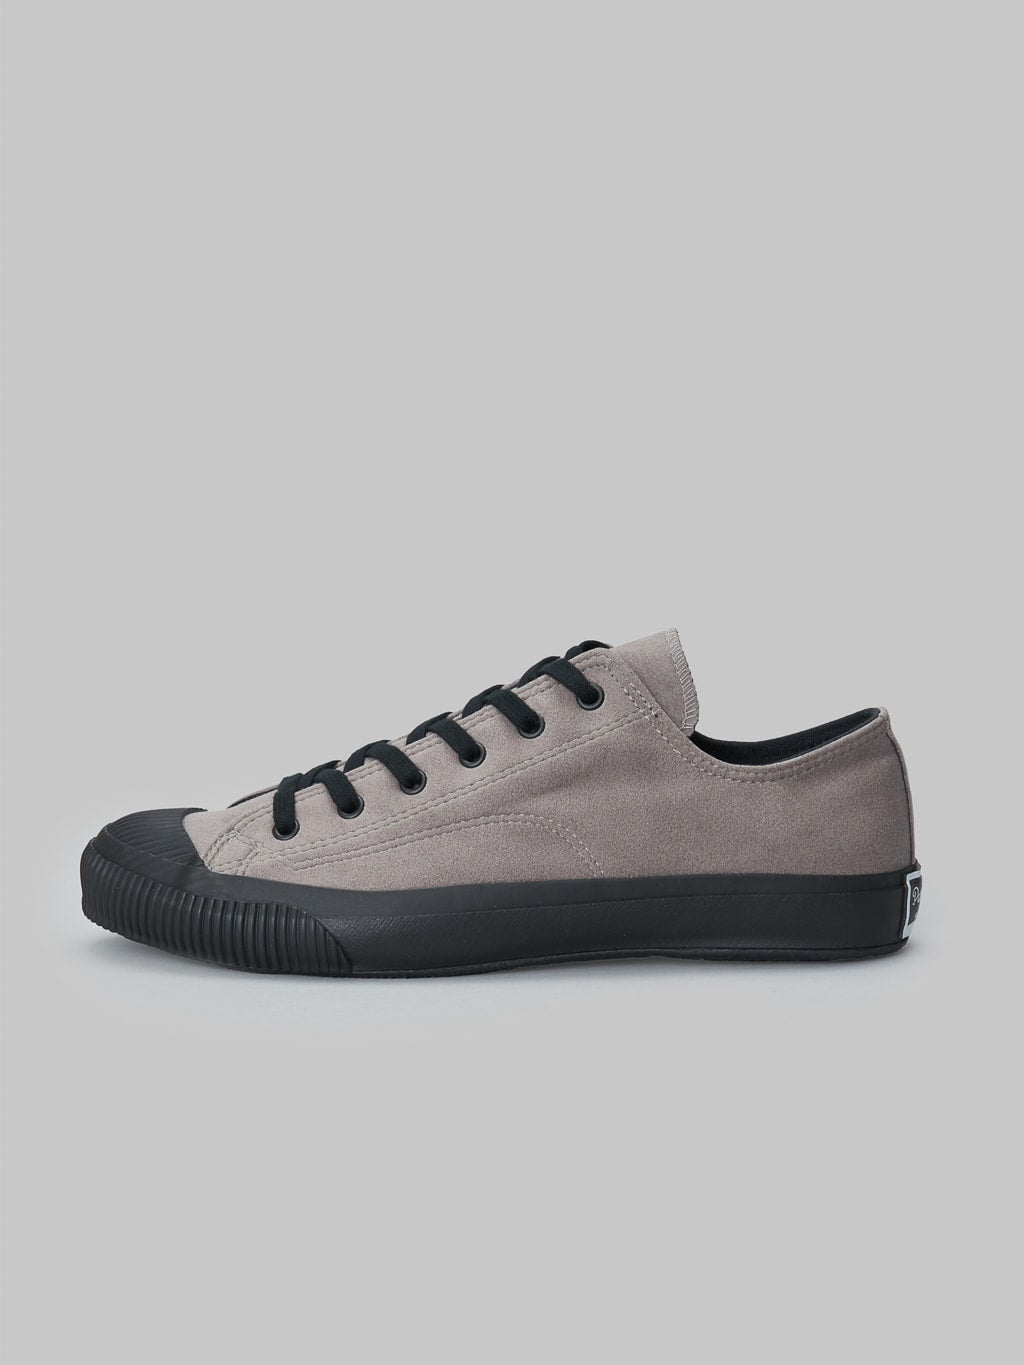 Pras shellcap low vegan sneakers suede grey black vulcanized